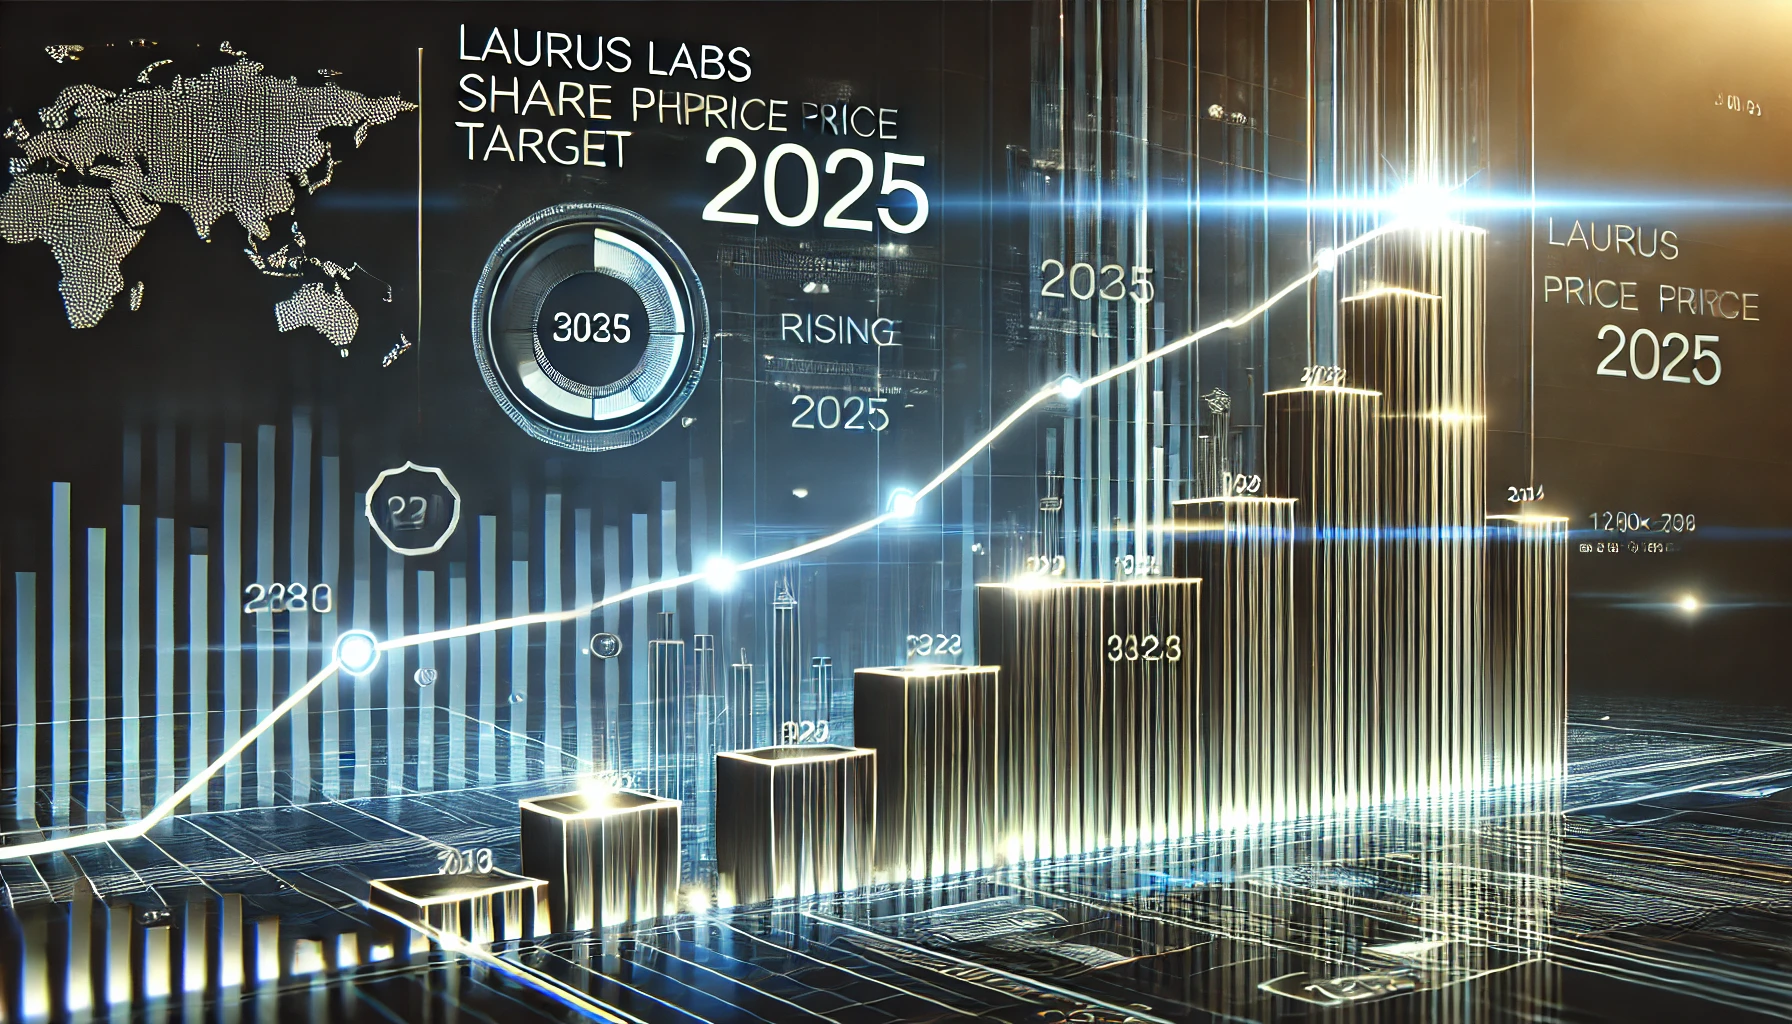 Laurus Labs Share Price Target 2025